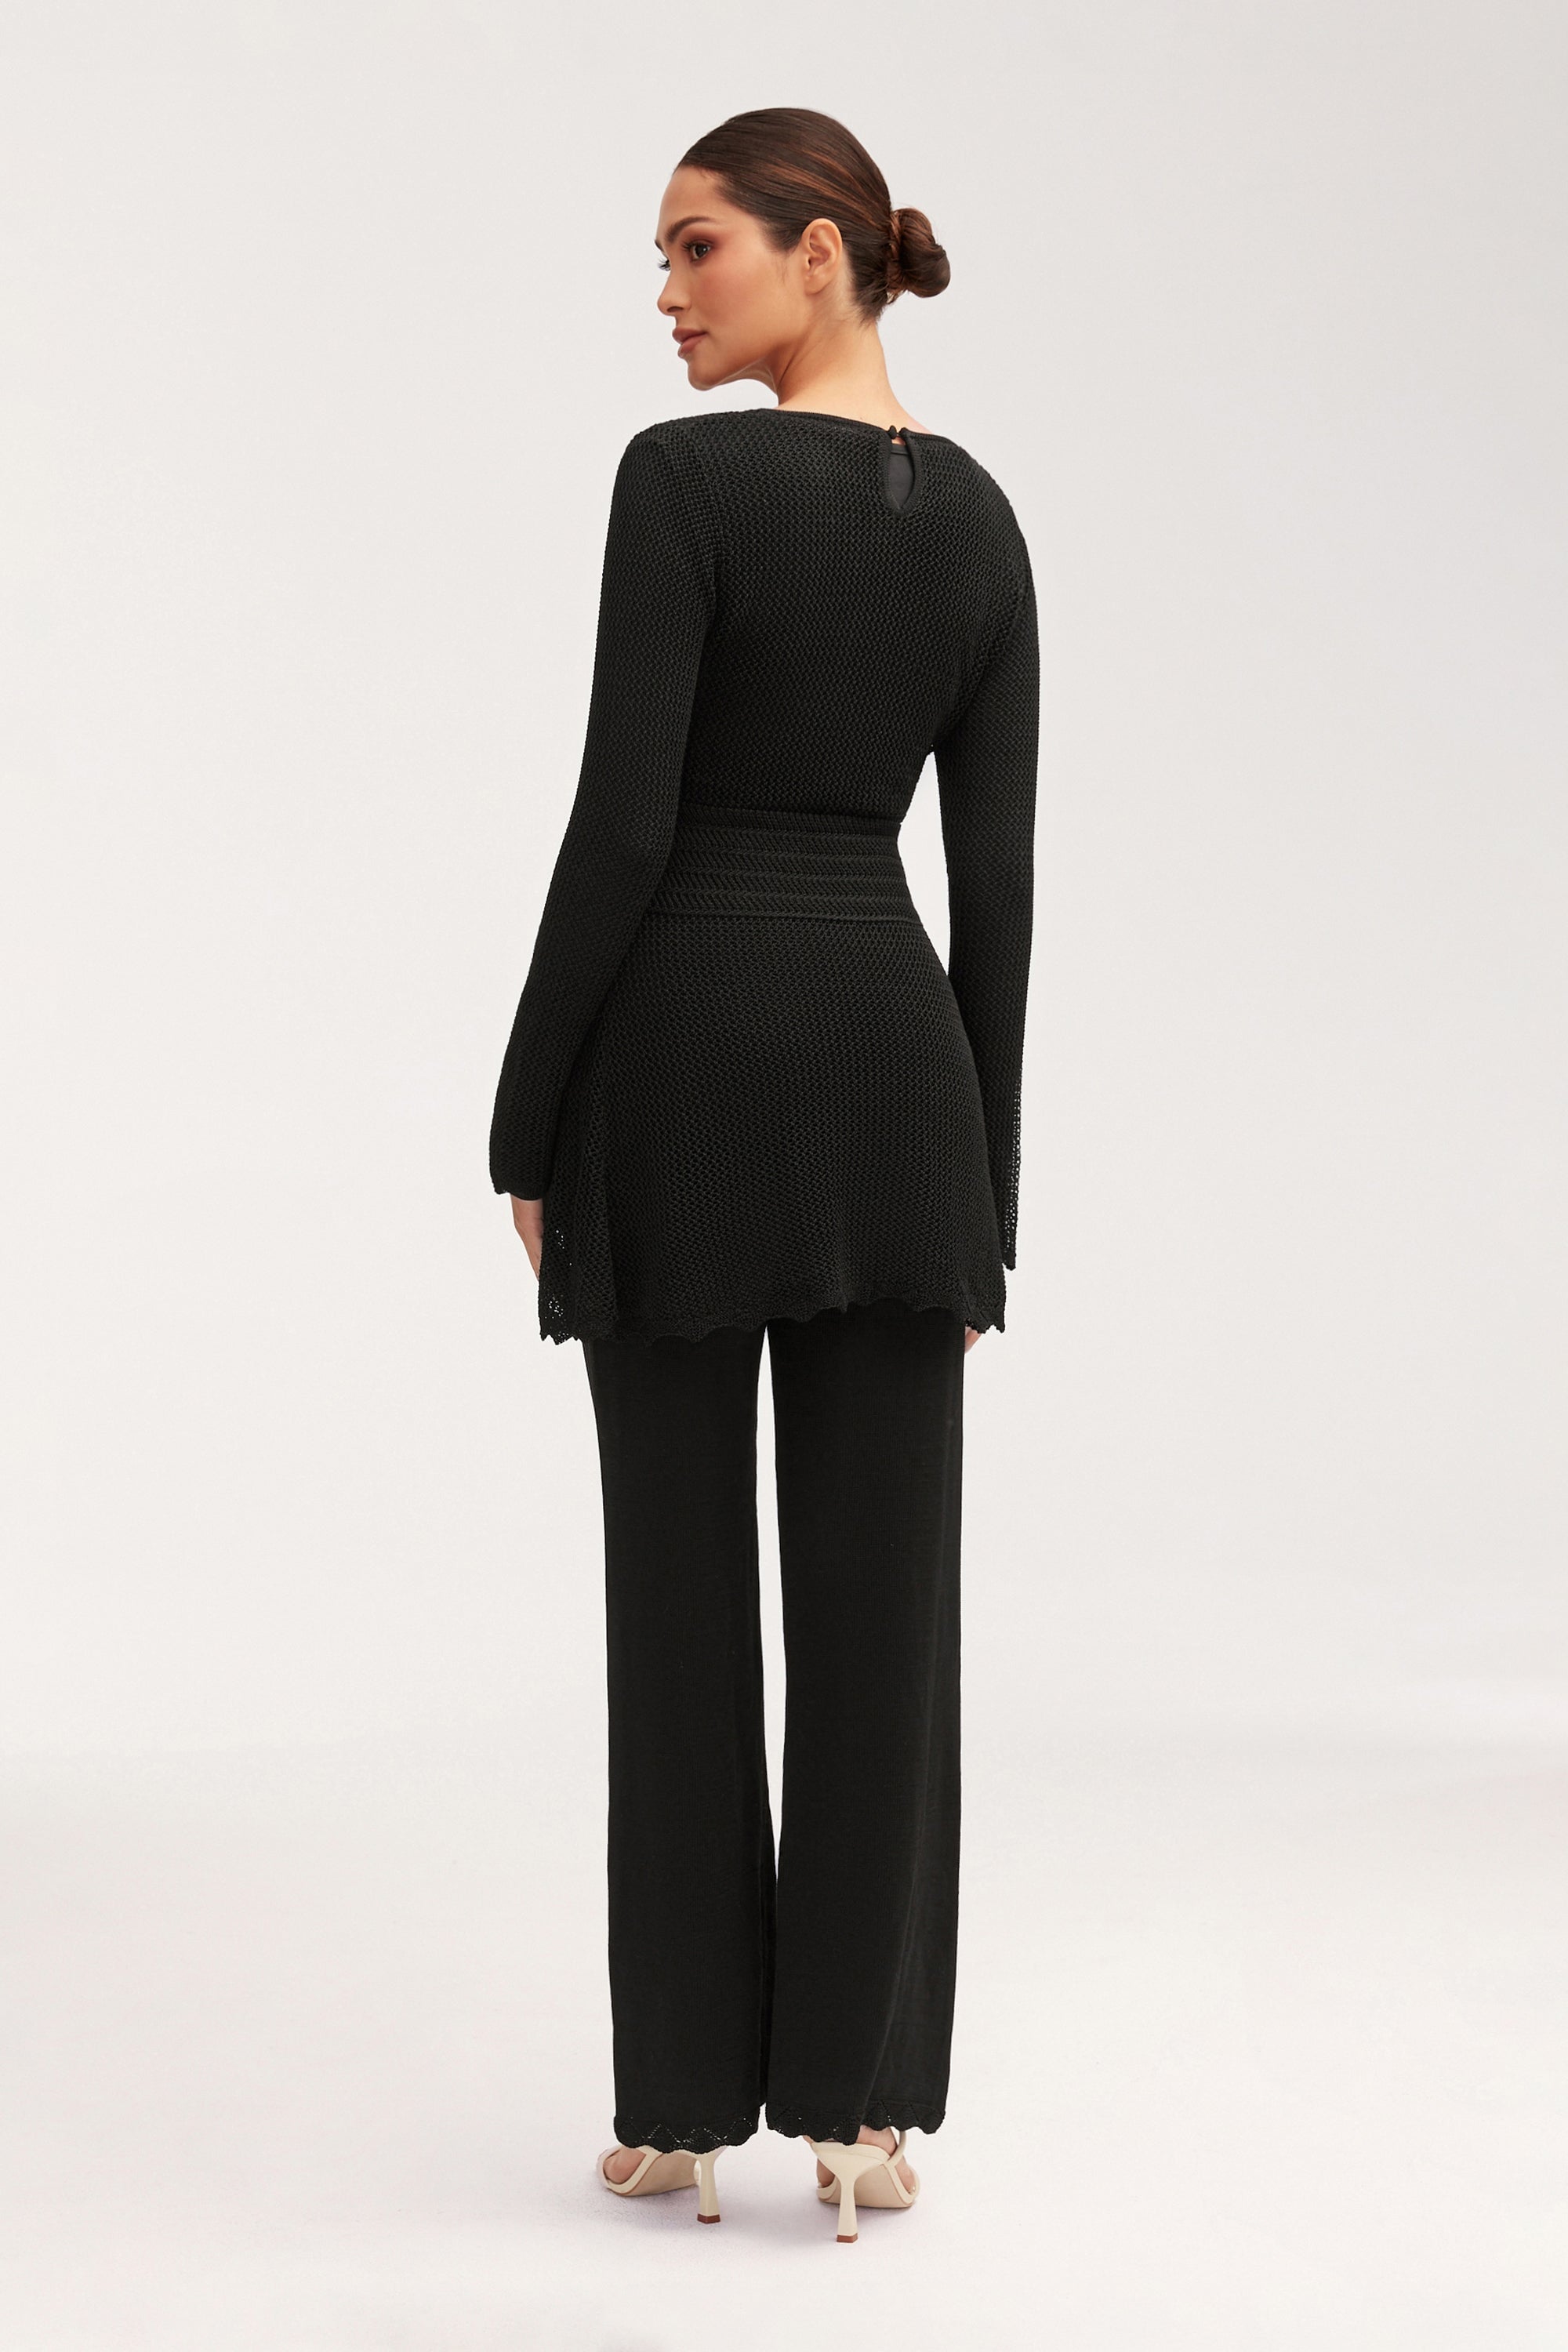 Kendall Crochet Top - Black Clothing Veiled 